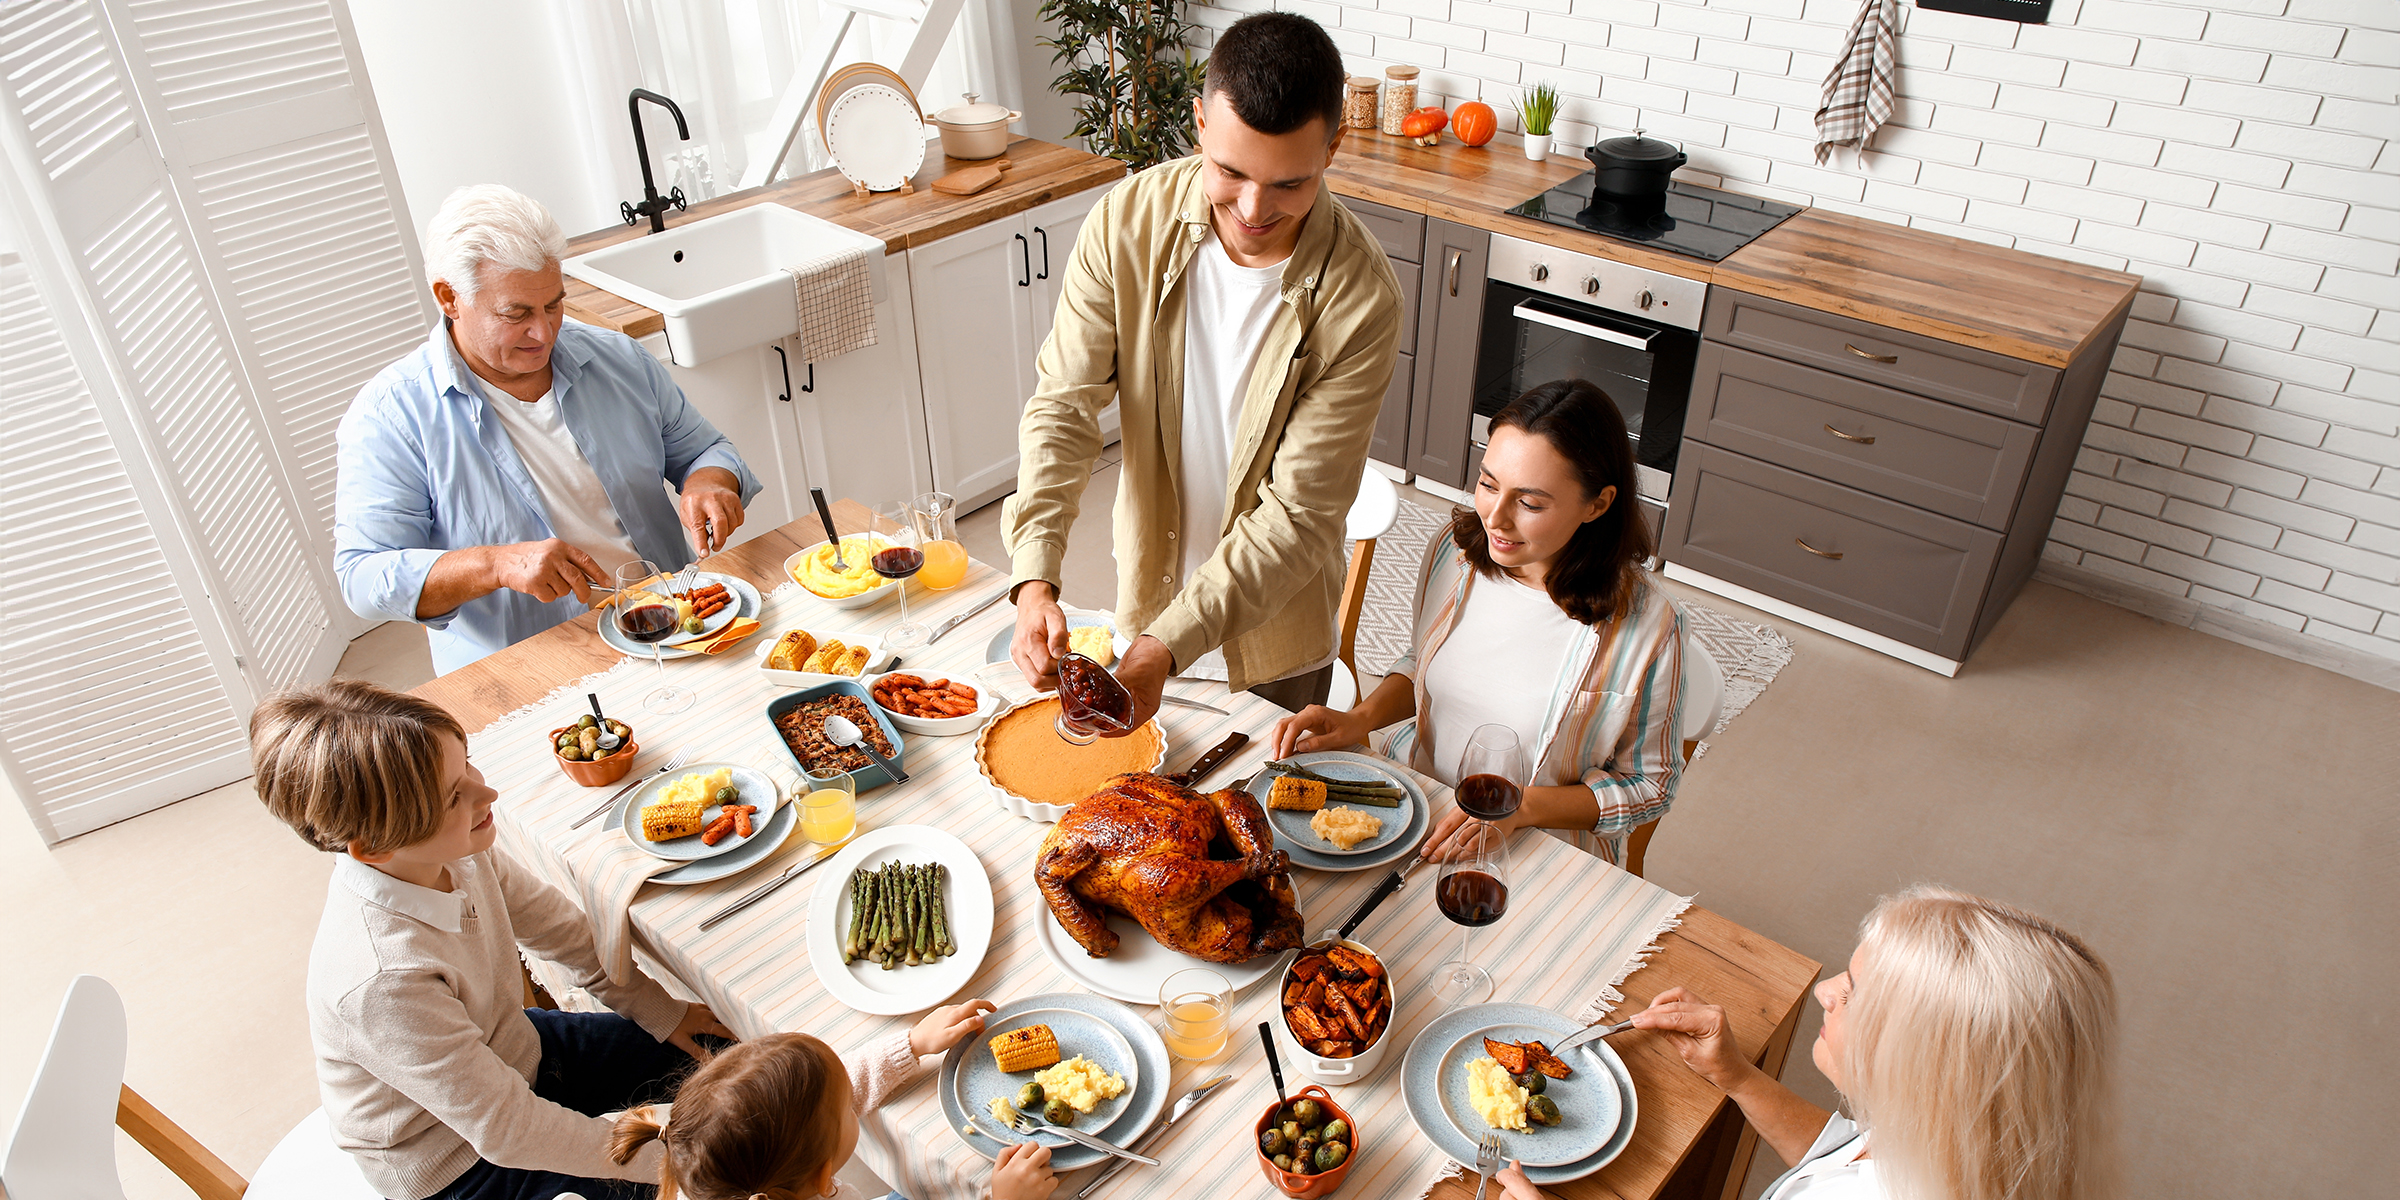 Un dîner en famille | Source : Shutterstock